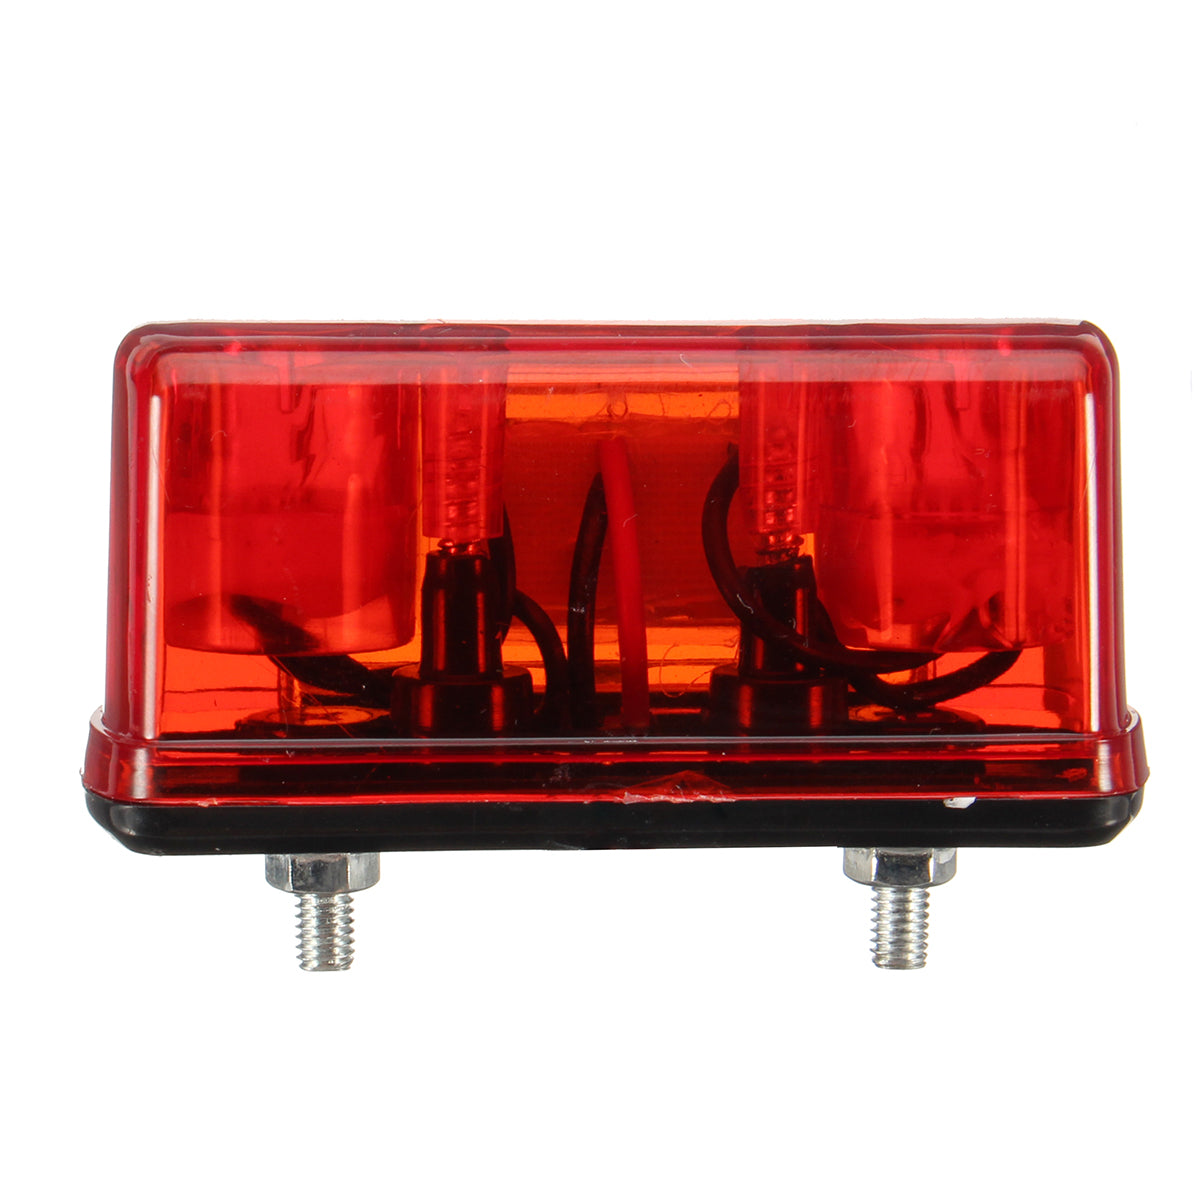 Firebrick 24V 4 SMD Red Car Rear Number License Plate Lights Lamp for Truck Trailer Lorry